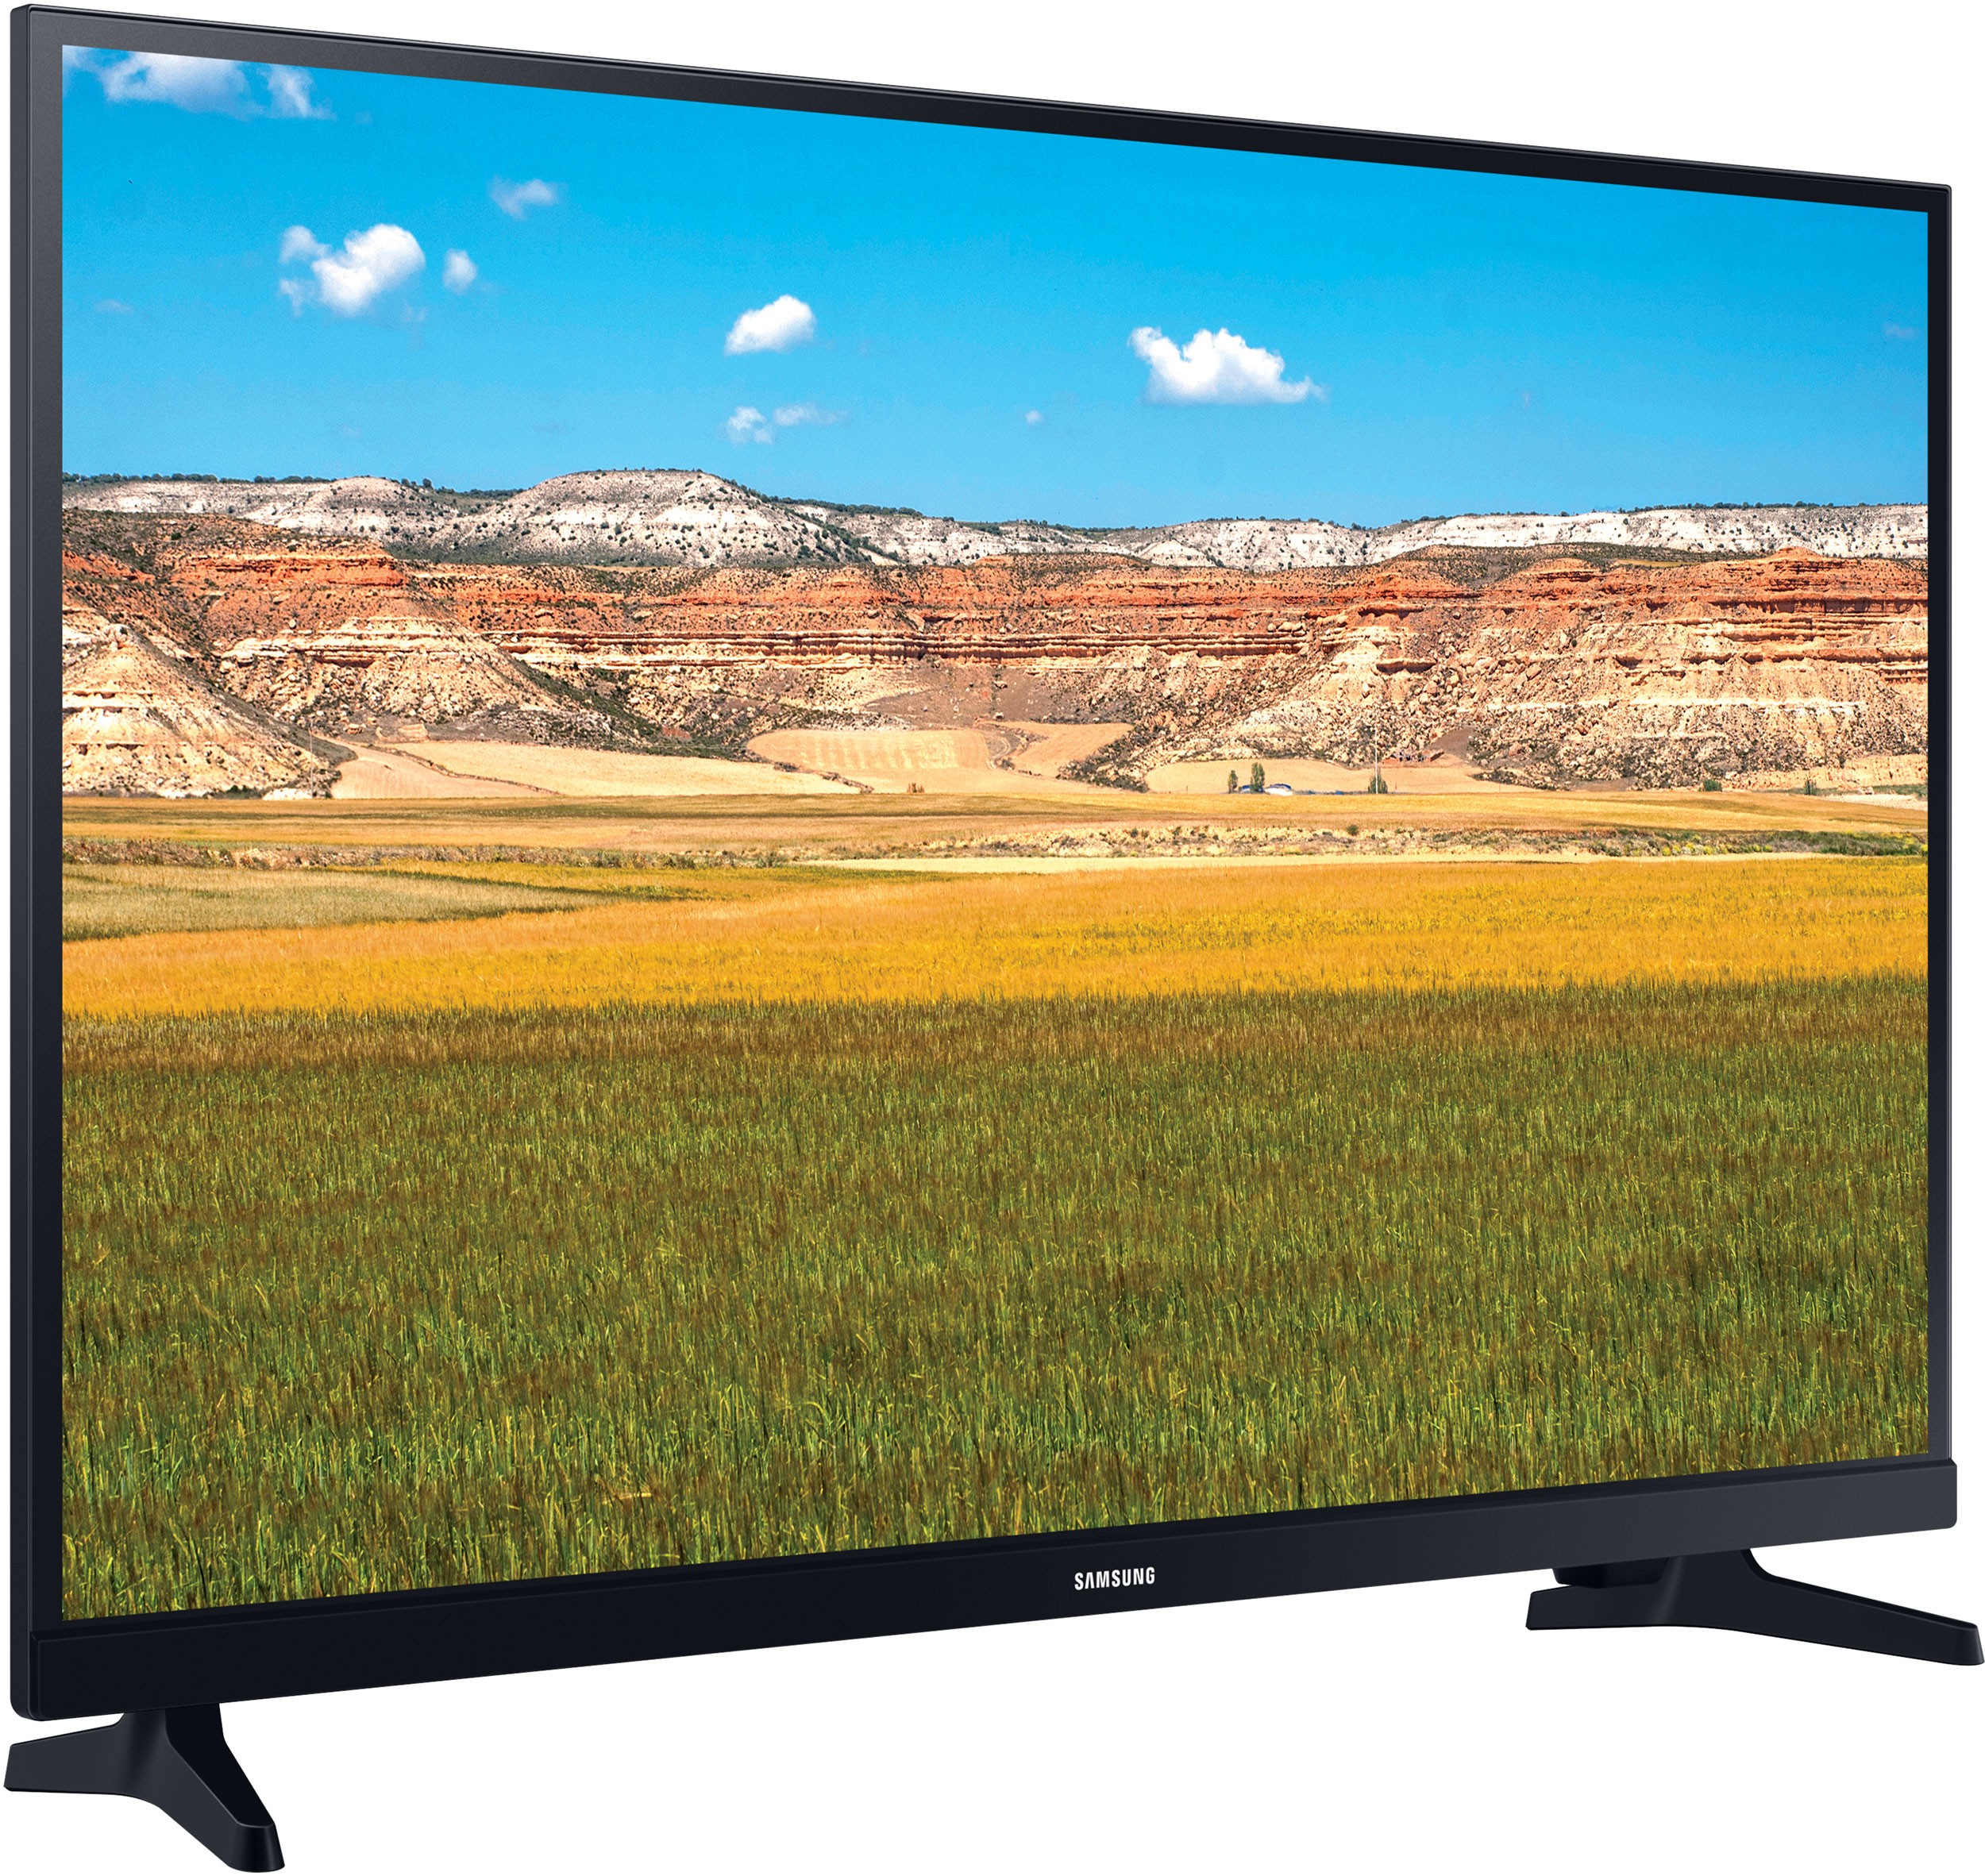 SAMSUNG TV LED 80 cm TV LED UE32T4005 80 cm